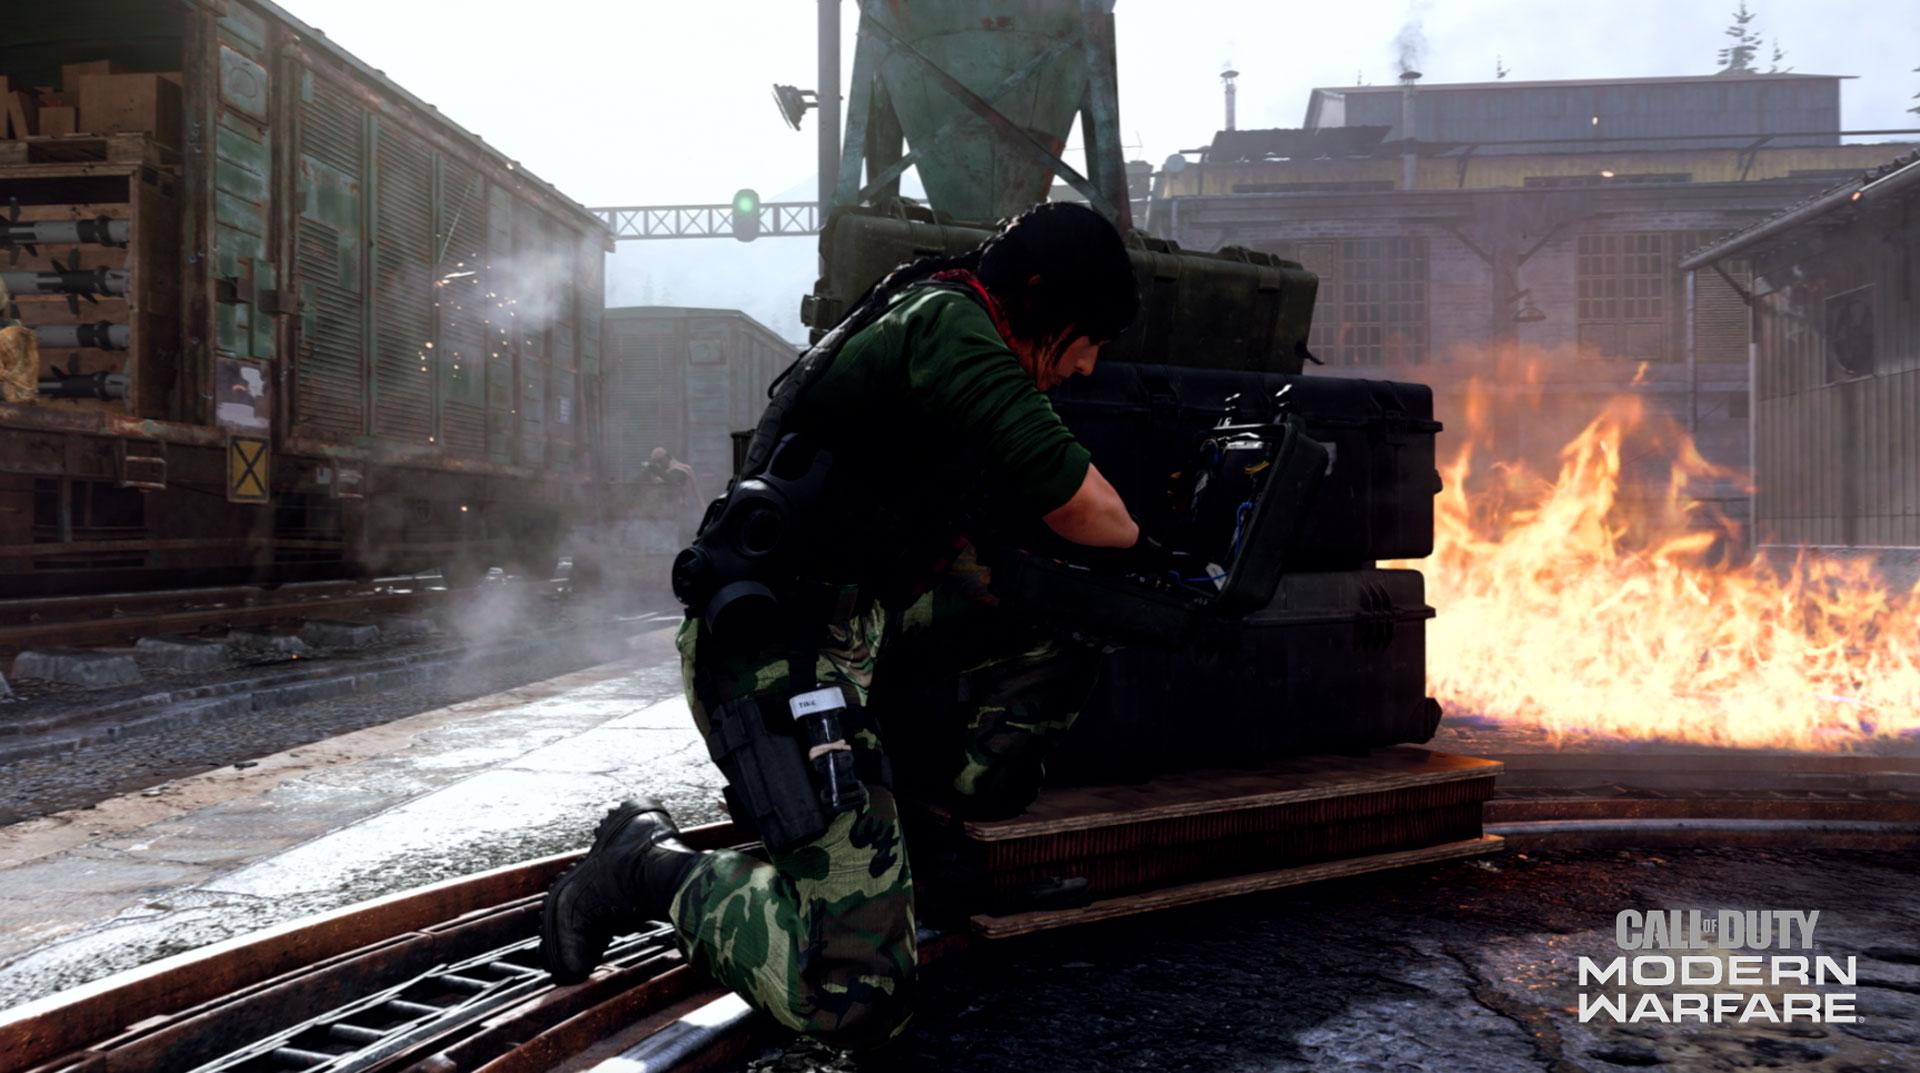 Player defusing bomb in Modern Warfare.